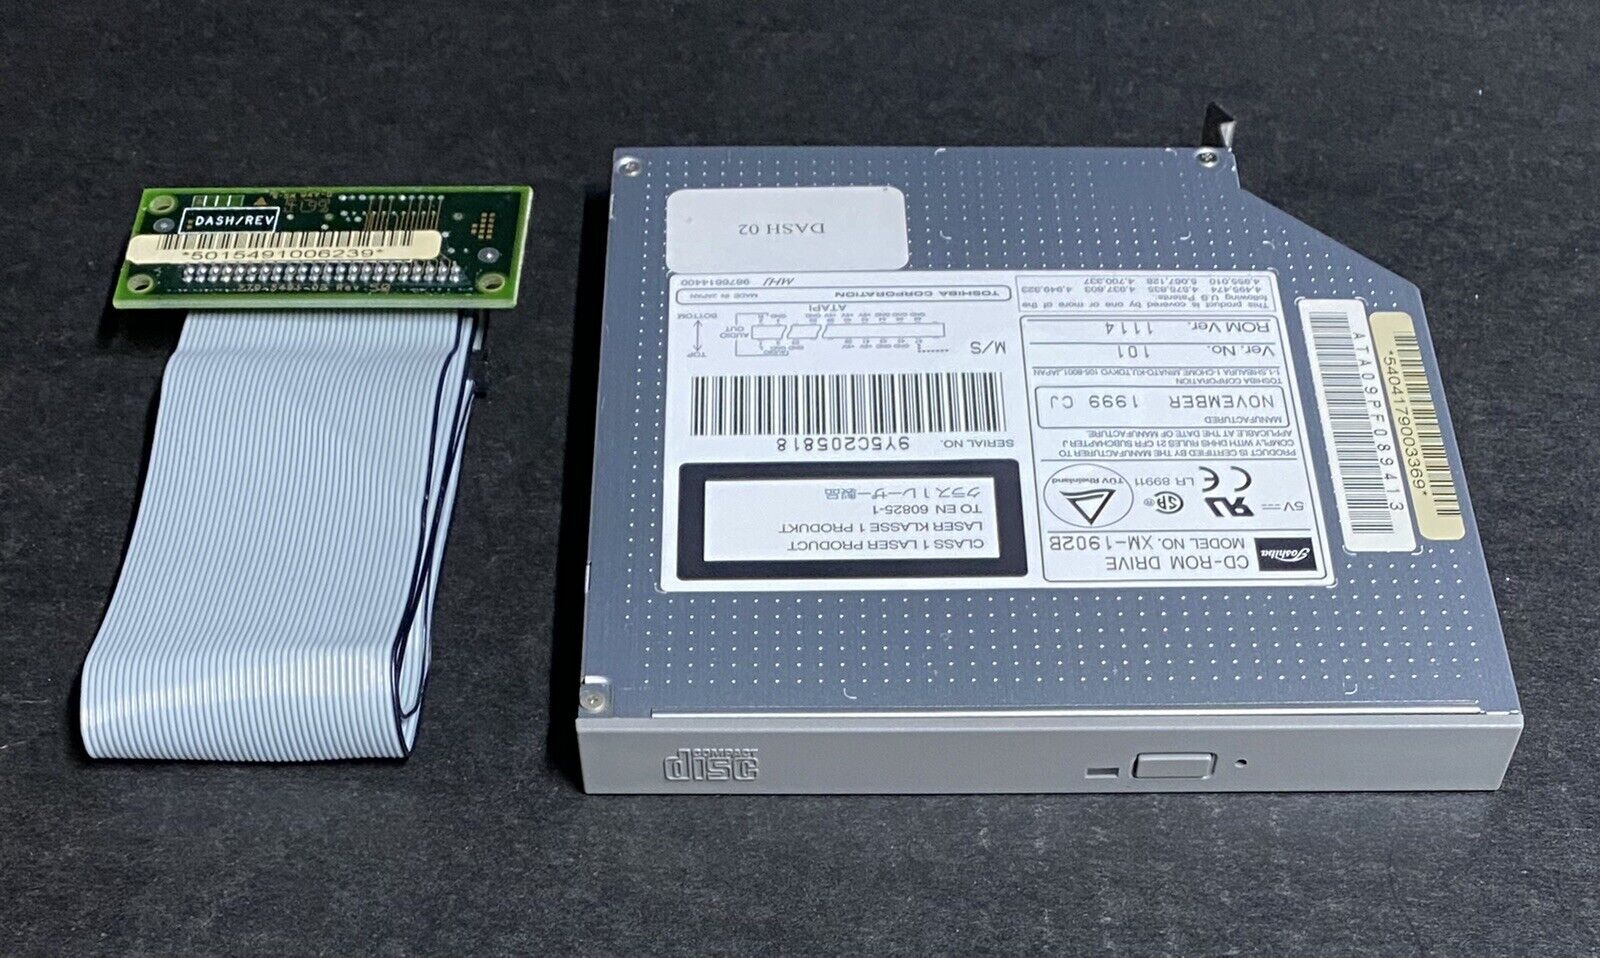 Sun X6971A 540-4179 Netra T1 / 105 /100 24X Slimline CD-ROM KIT w/cable